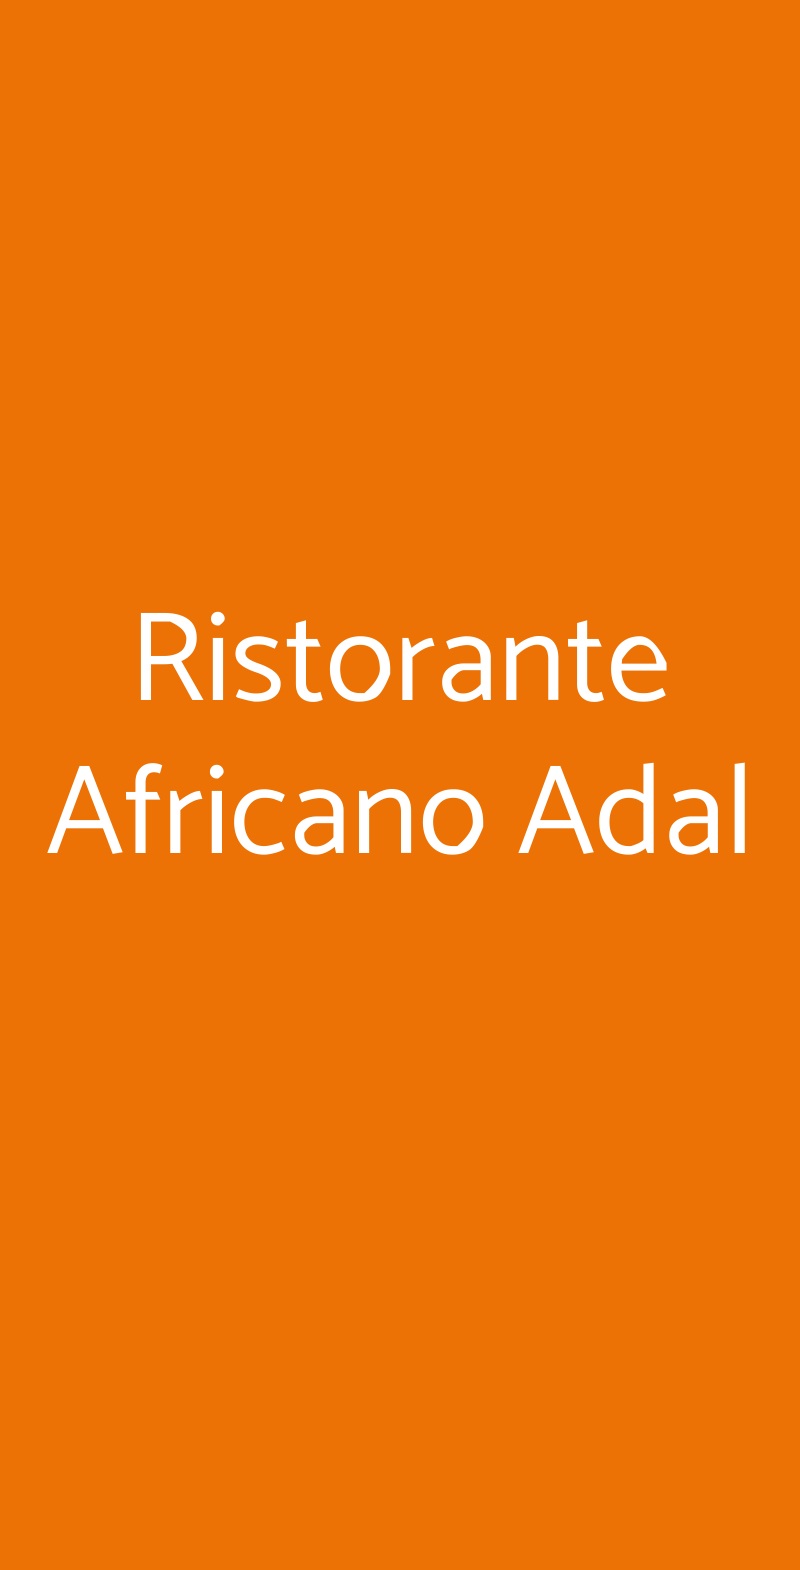 Ristorante Africano Adal Bologna menù 1 pagina